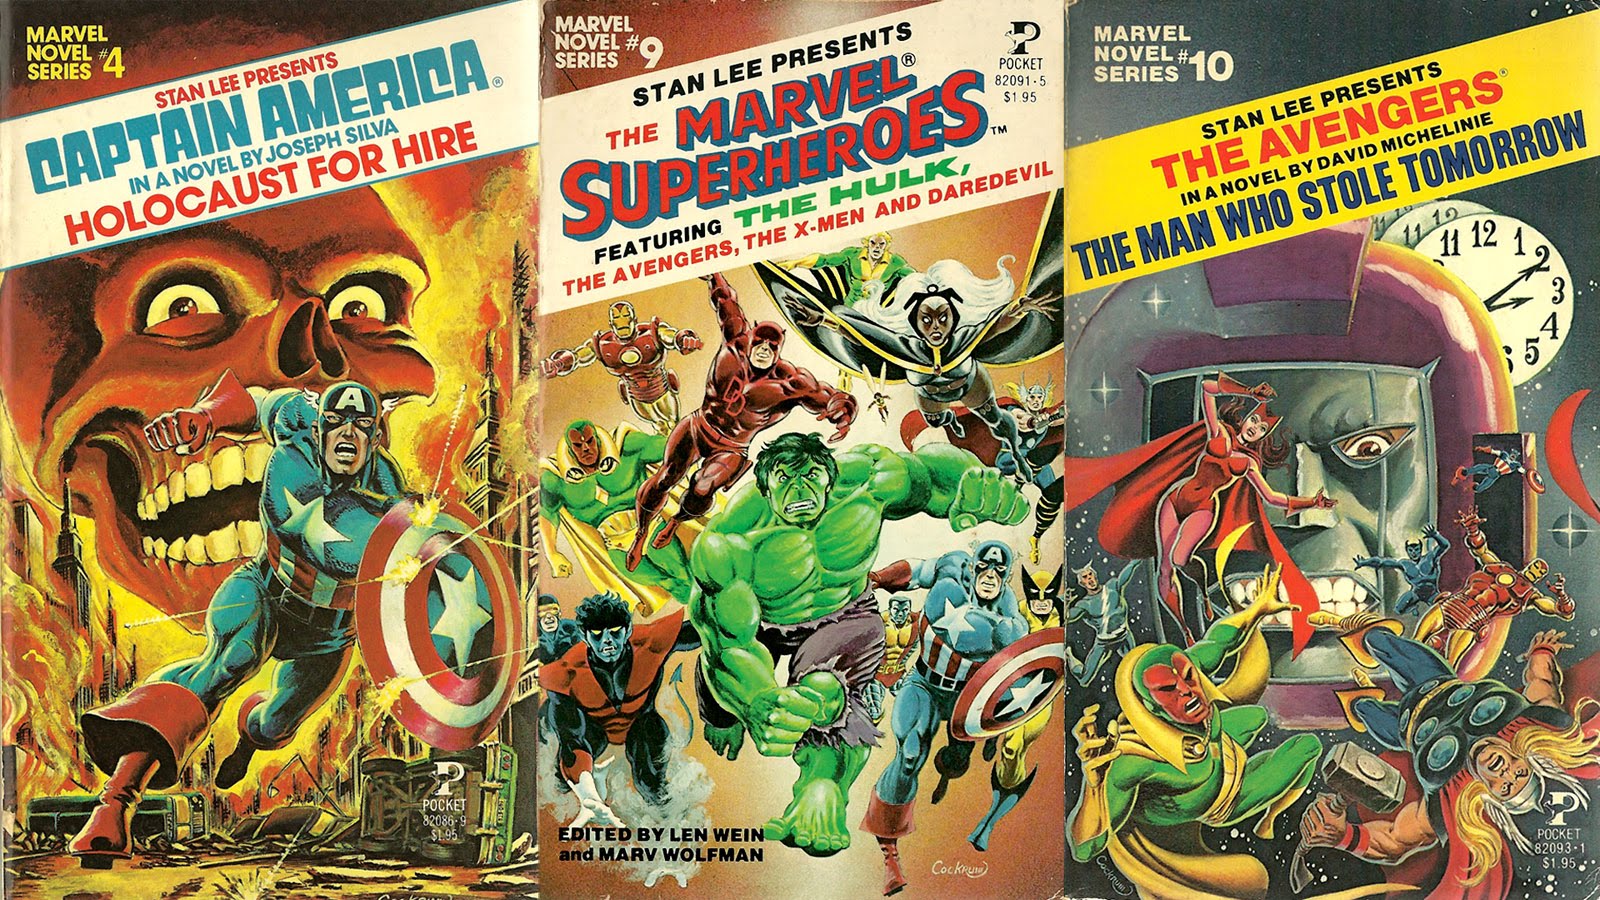 Marvel 1970s novels covers